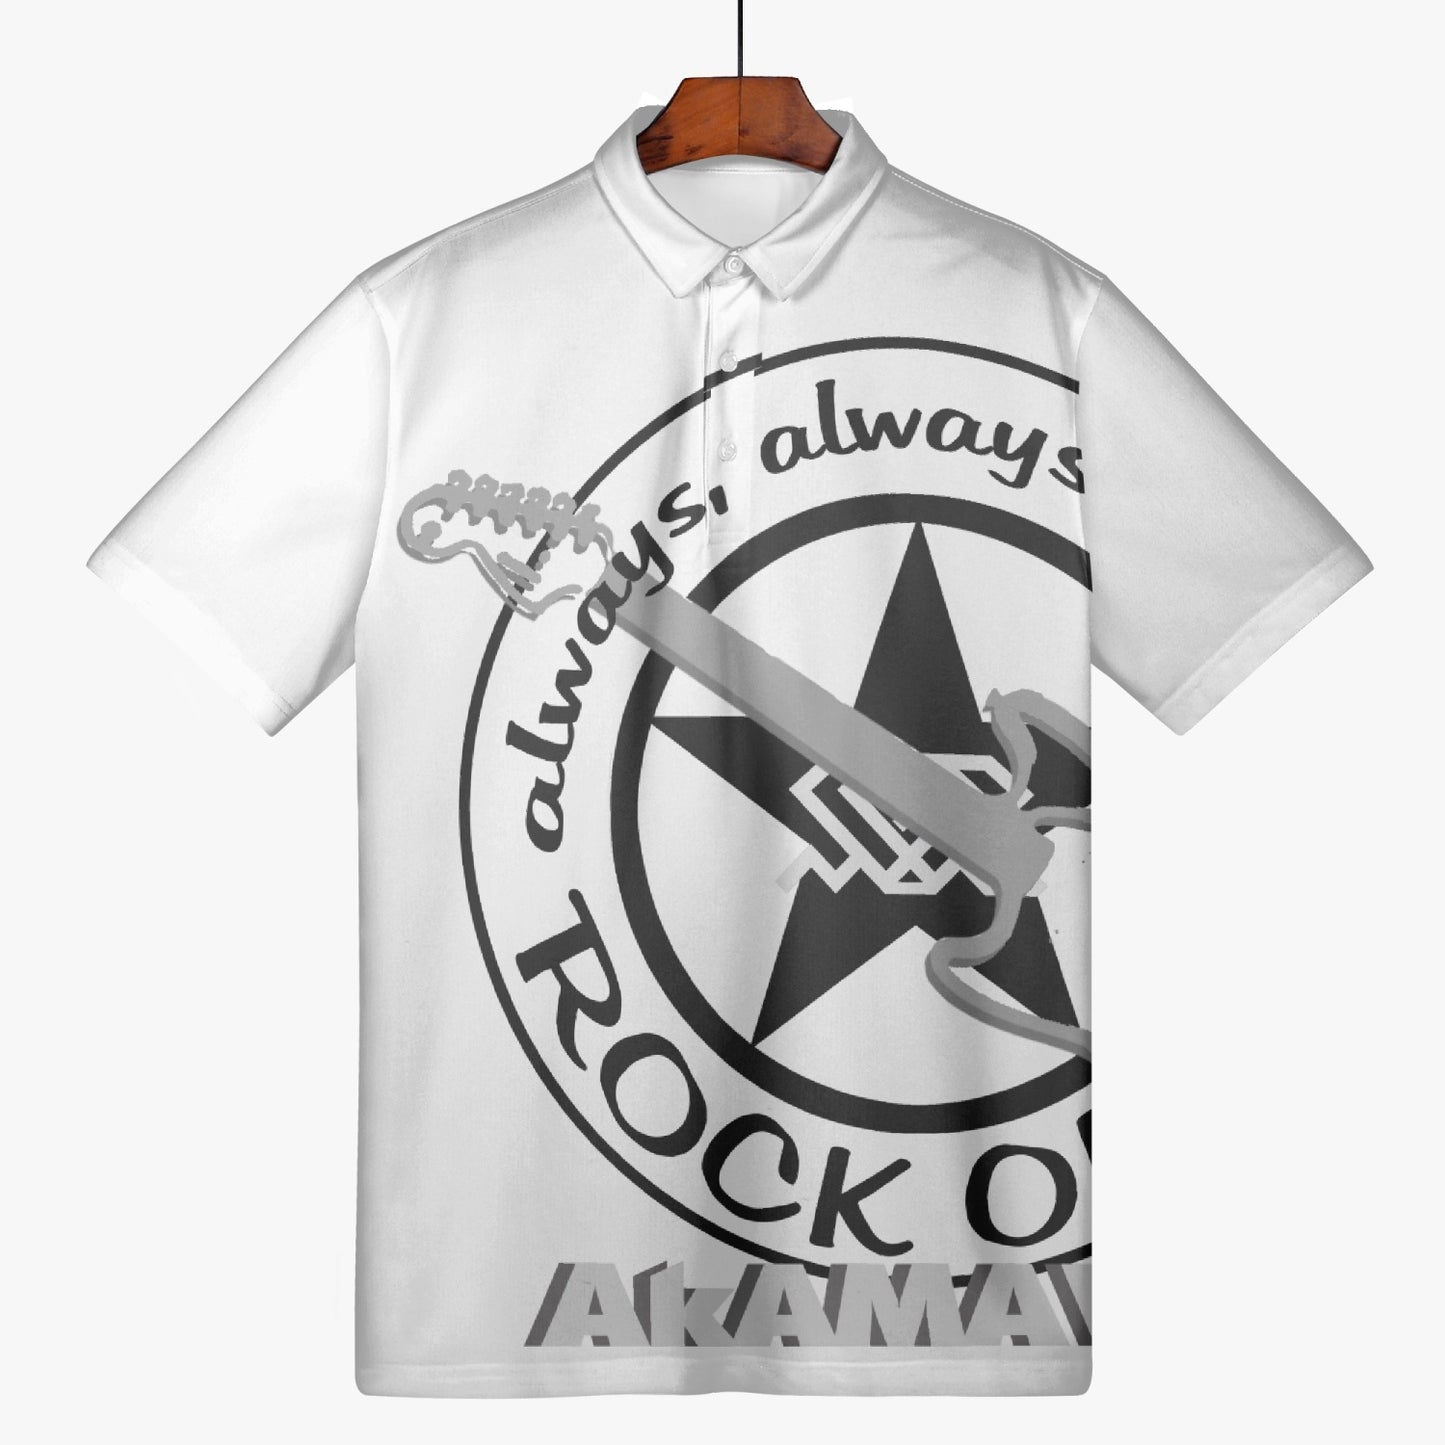 AC10M008 ROCK ON!!!  Camiseta Polo, exclusiva, caballero,  Diseño AkAMAWA